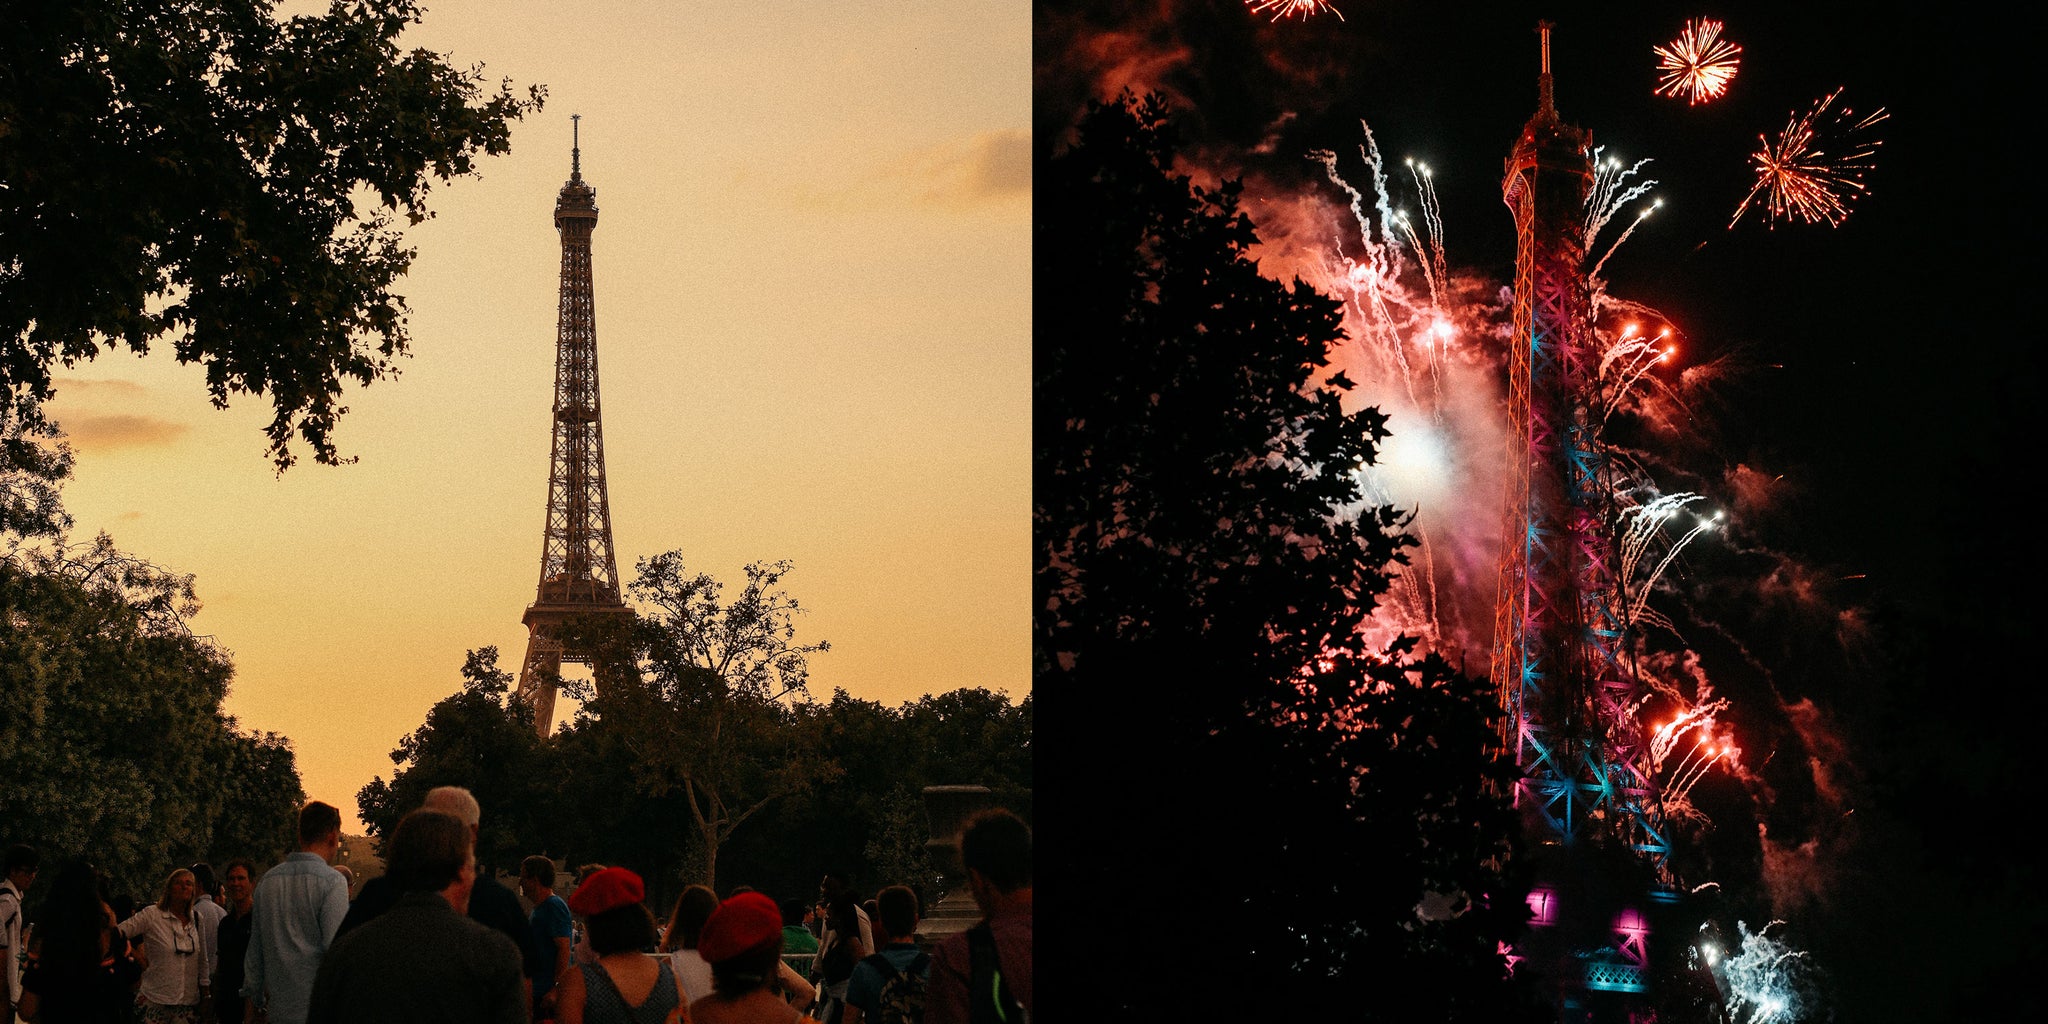 The Eiffel Tower fireworks shot by Nicole Breanne